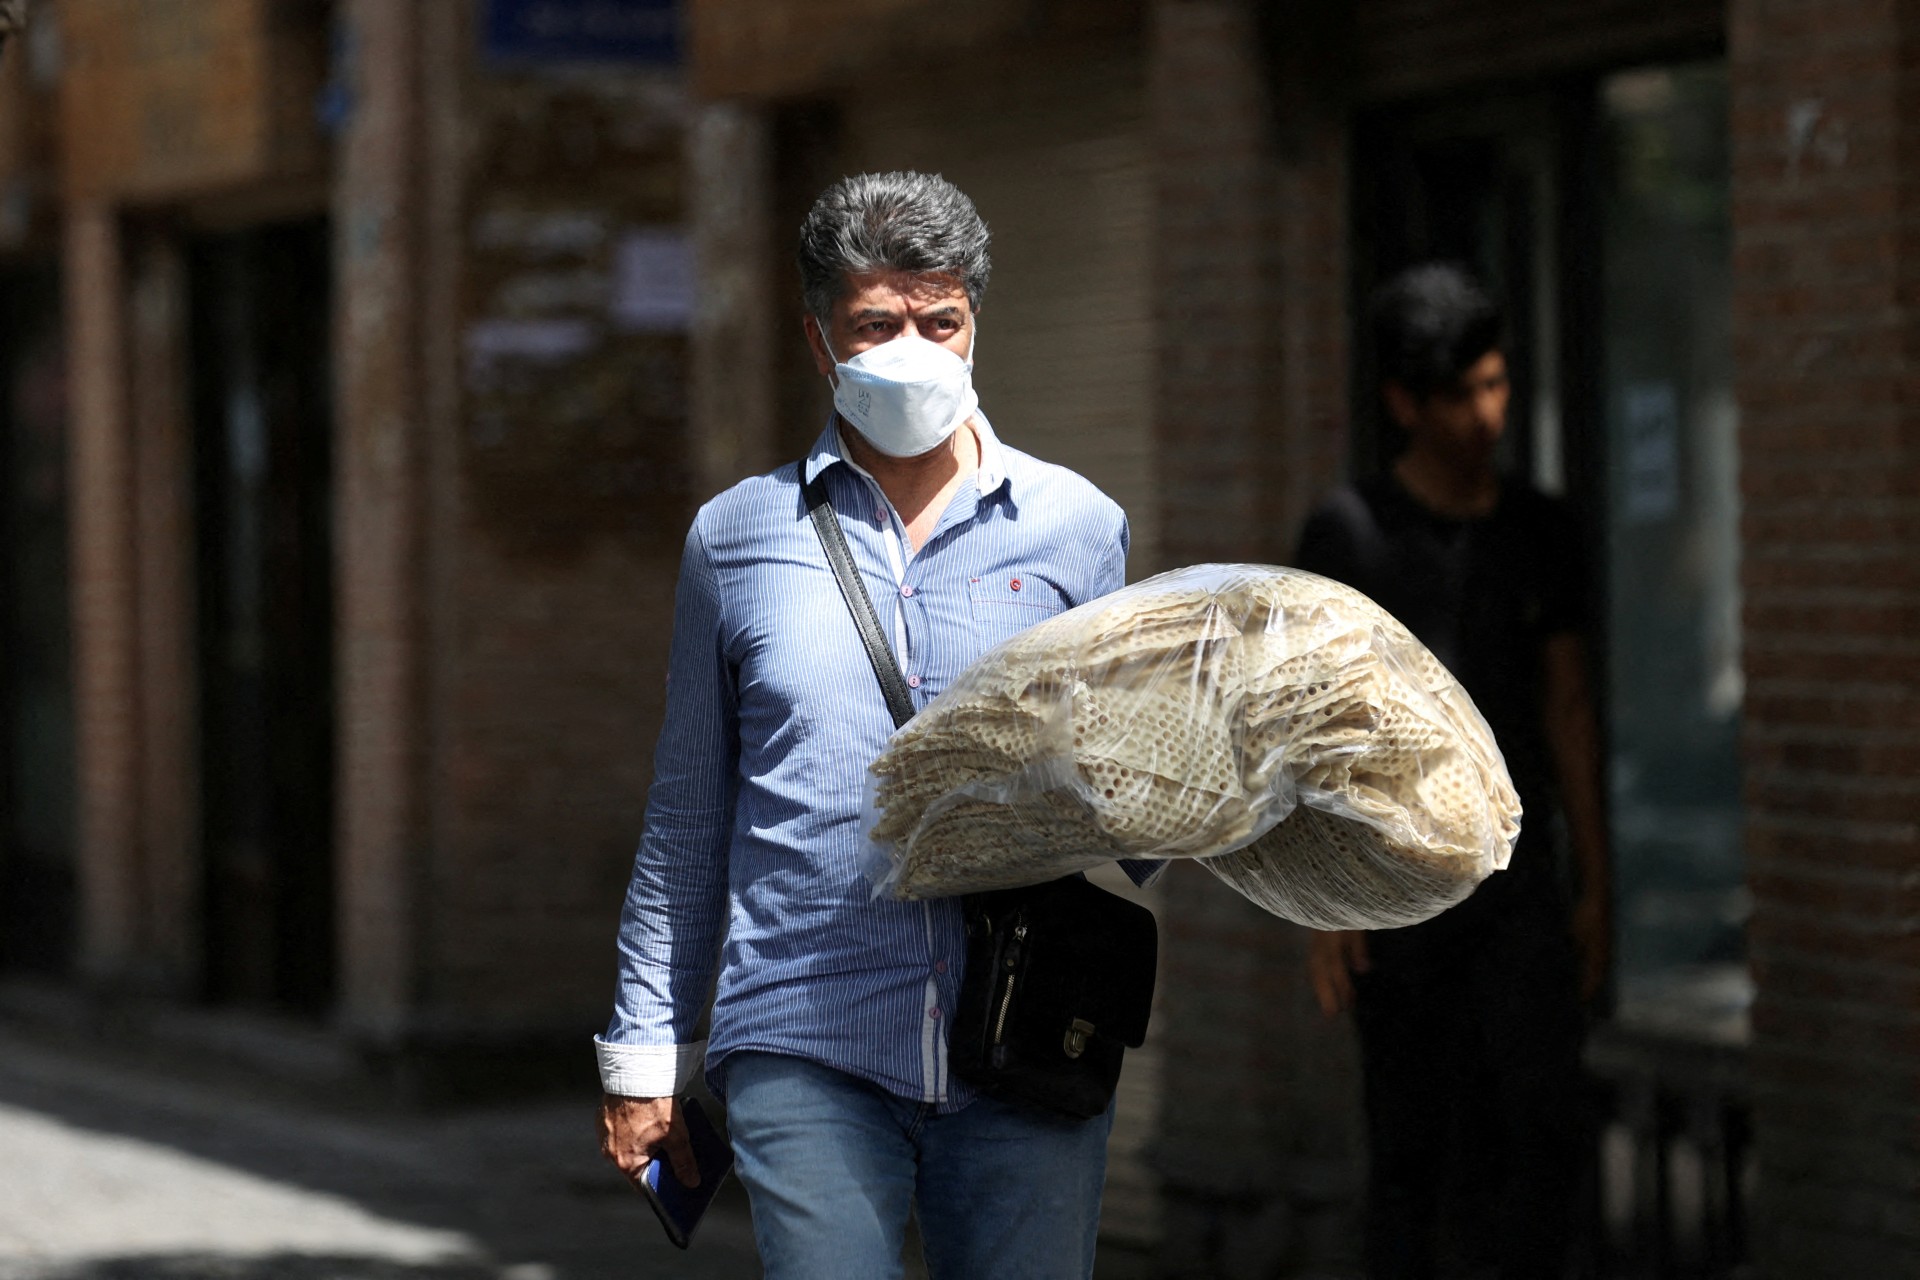 An Iranian man holds stacks of bread as he walks along a street in Tehran (Reuters)